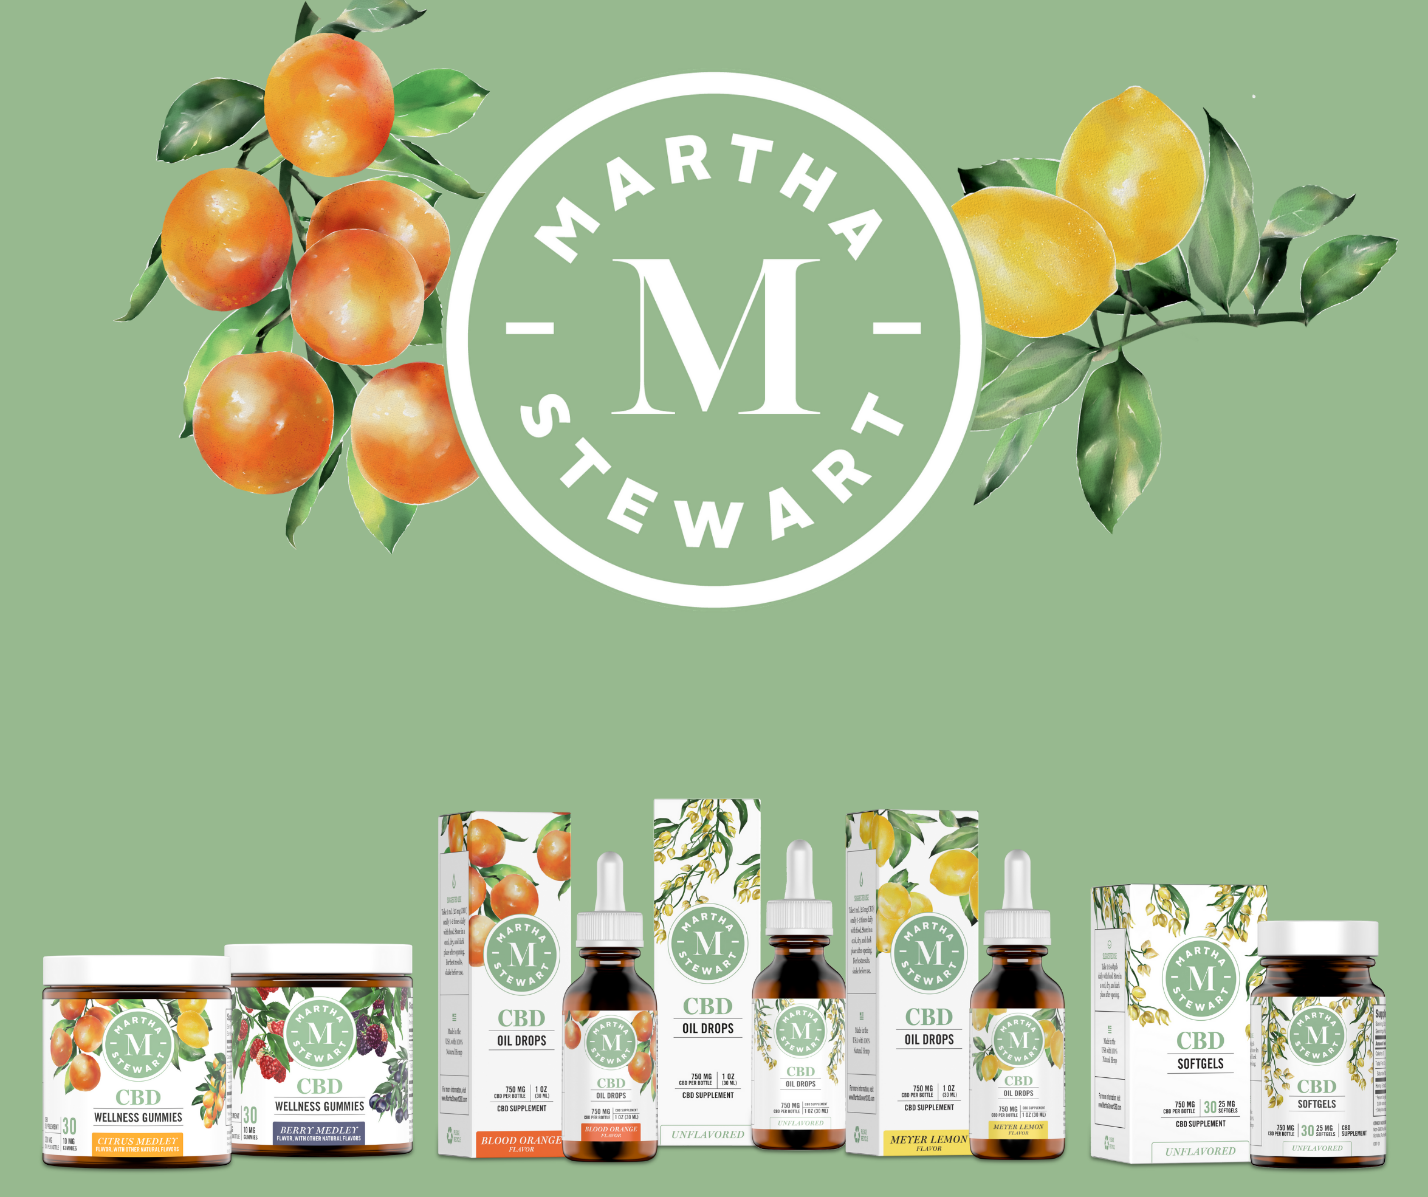 Anavii Market Offers Brand New Line of Martha Stewart CBD Products |  Newswire